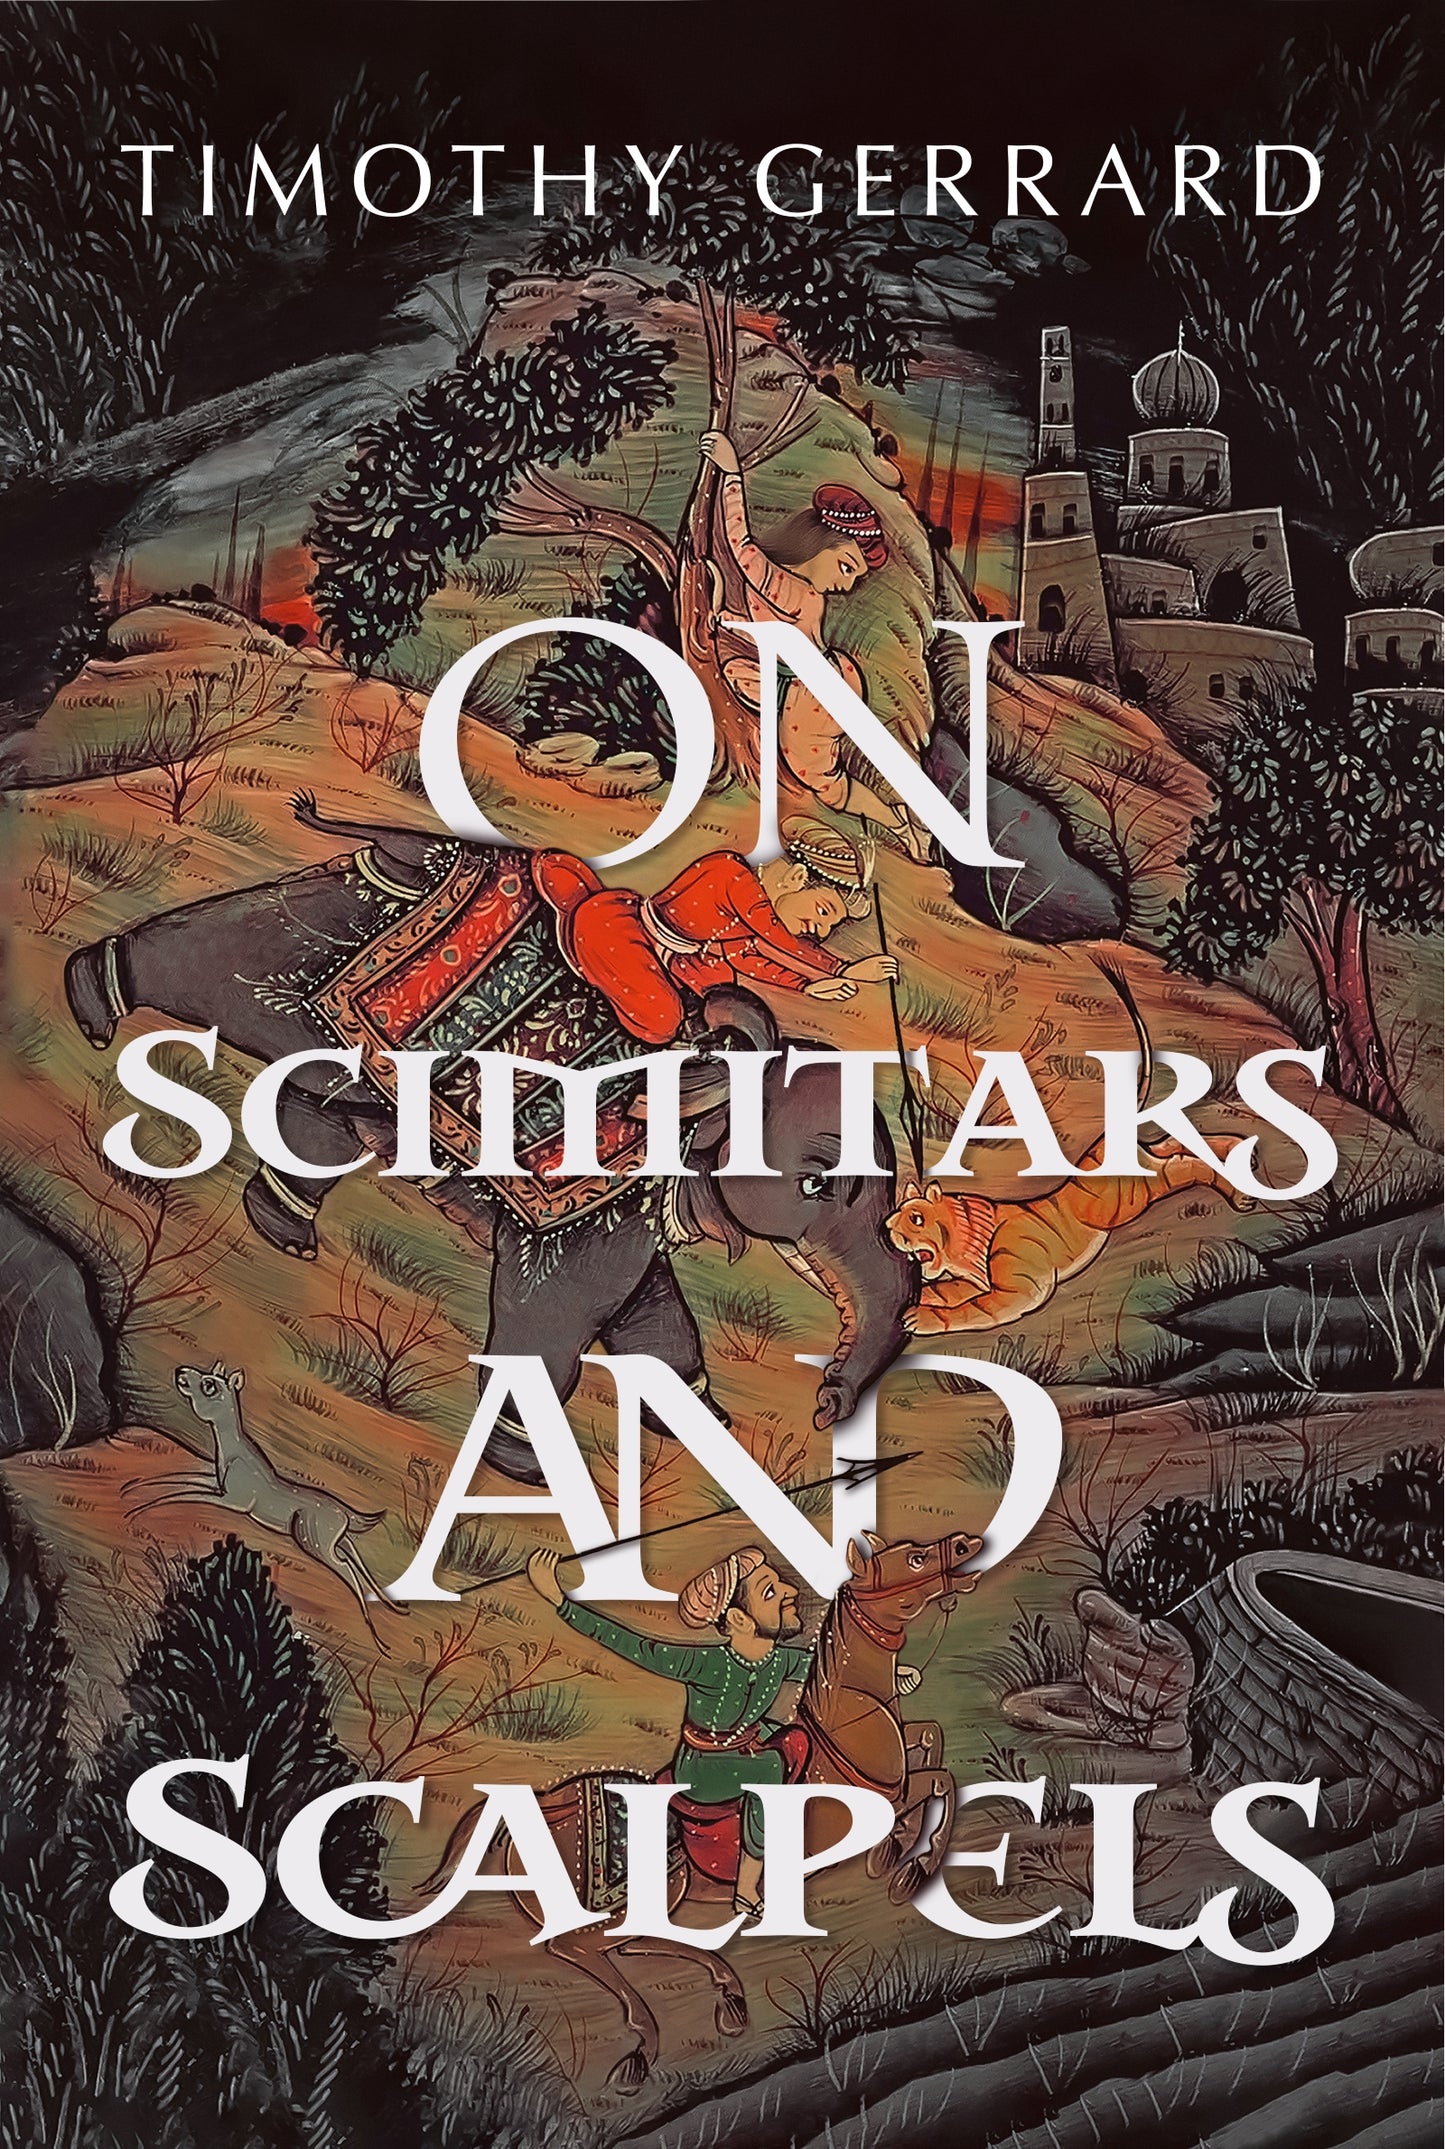 On Scimitars and Scalpels